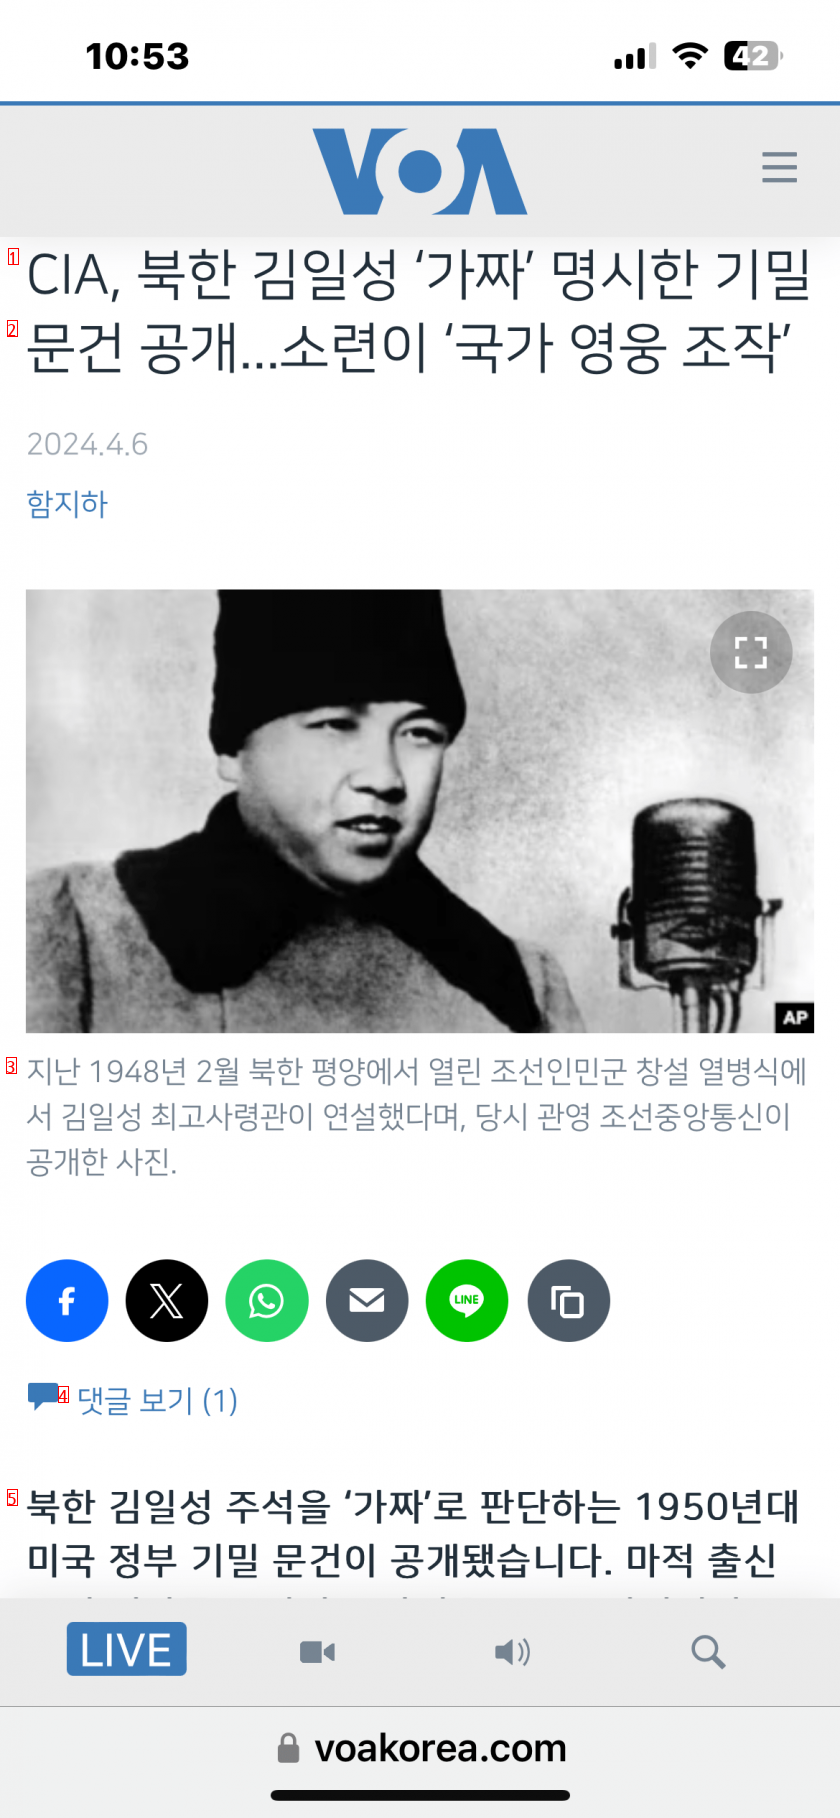 CIA """"북한 김일성은 가짜"""" 문건 공개